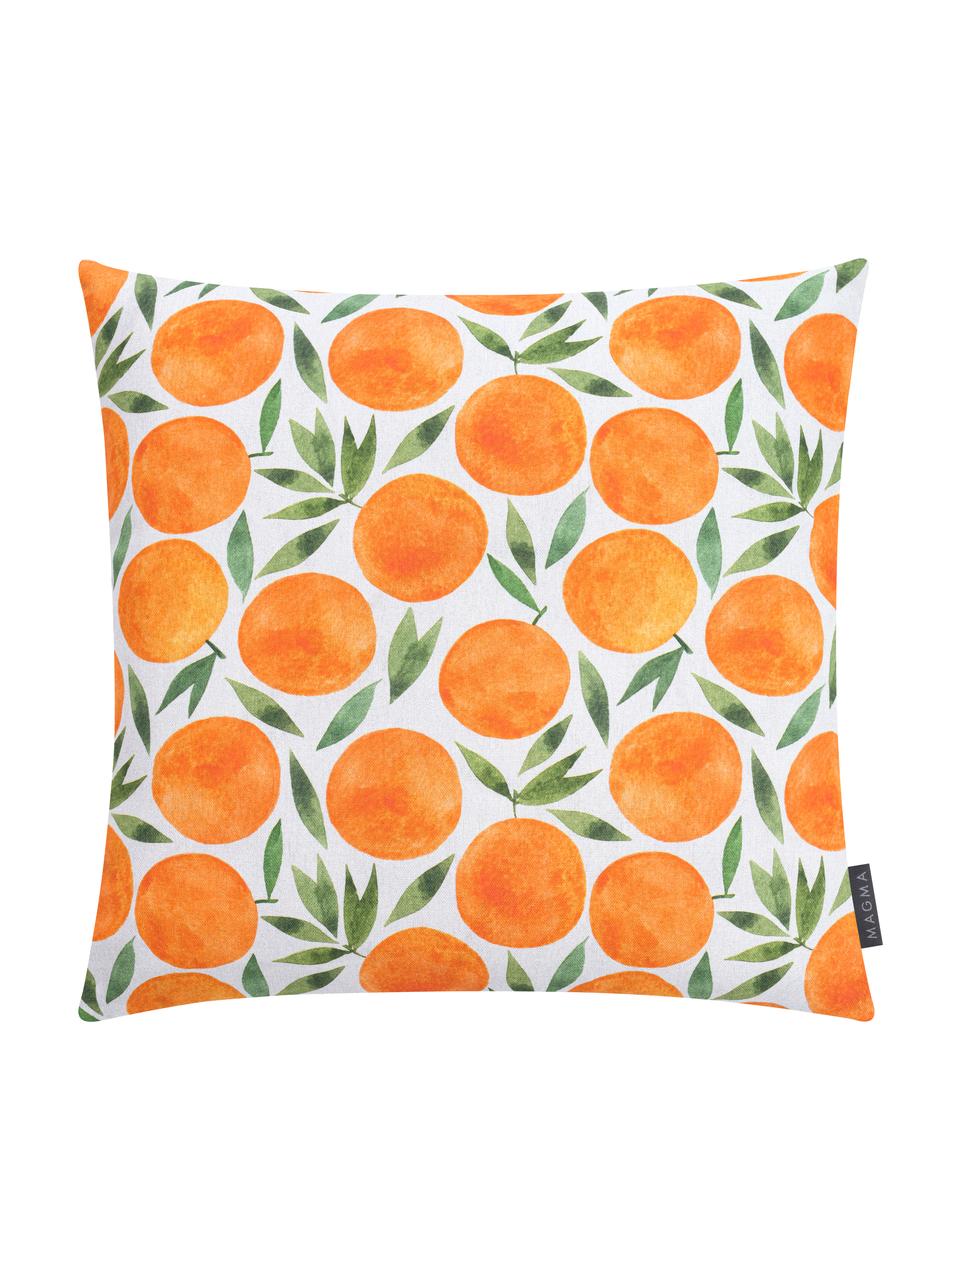 Federa arredo con motivo estivo Orange, Tessuto: mezzo panama, Arancione, bianco, verde, Larg. 50 x Lung. 50 cm